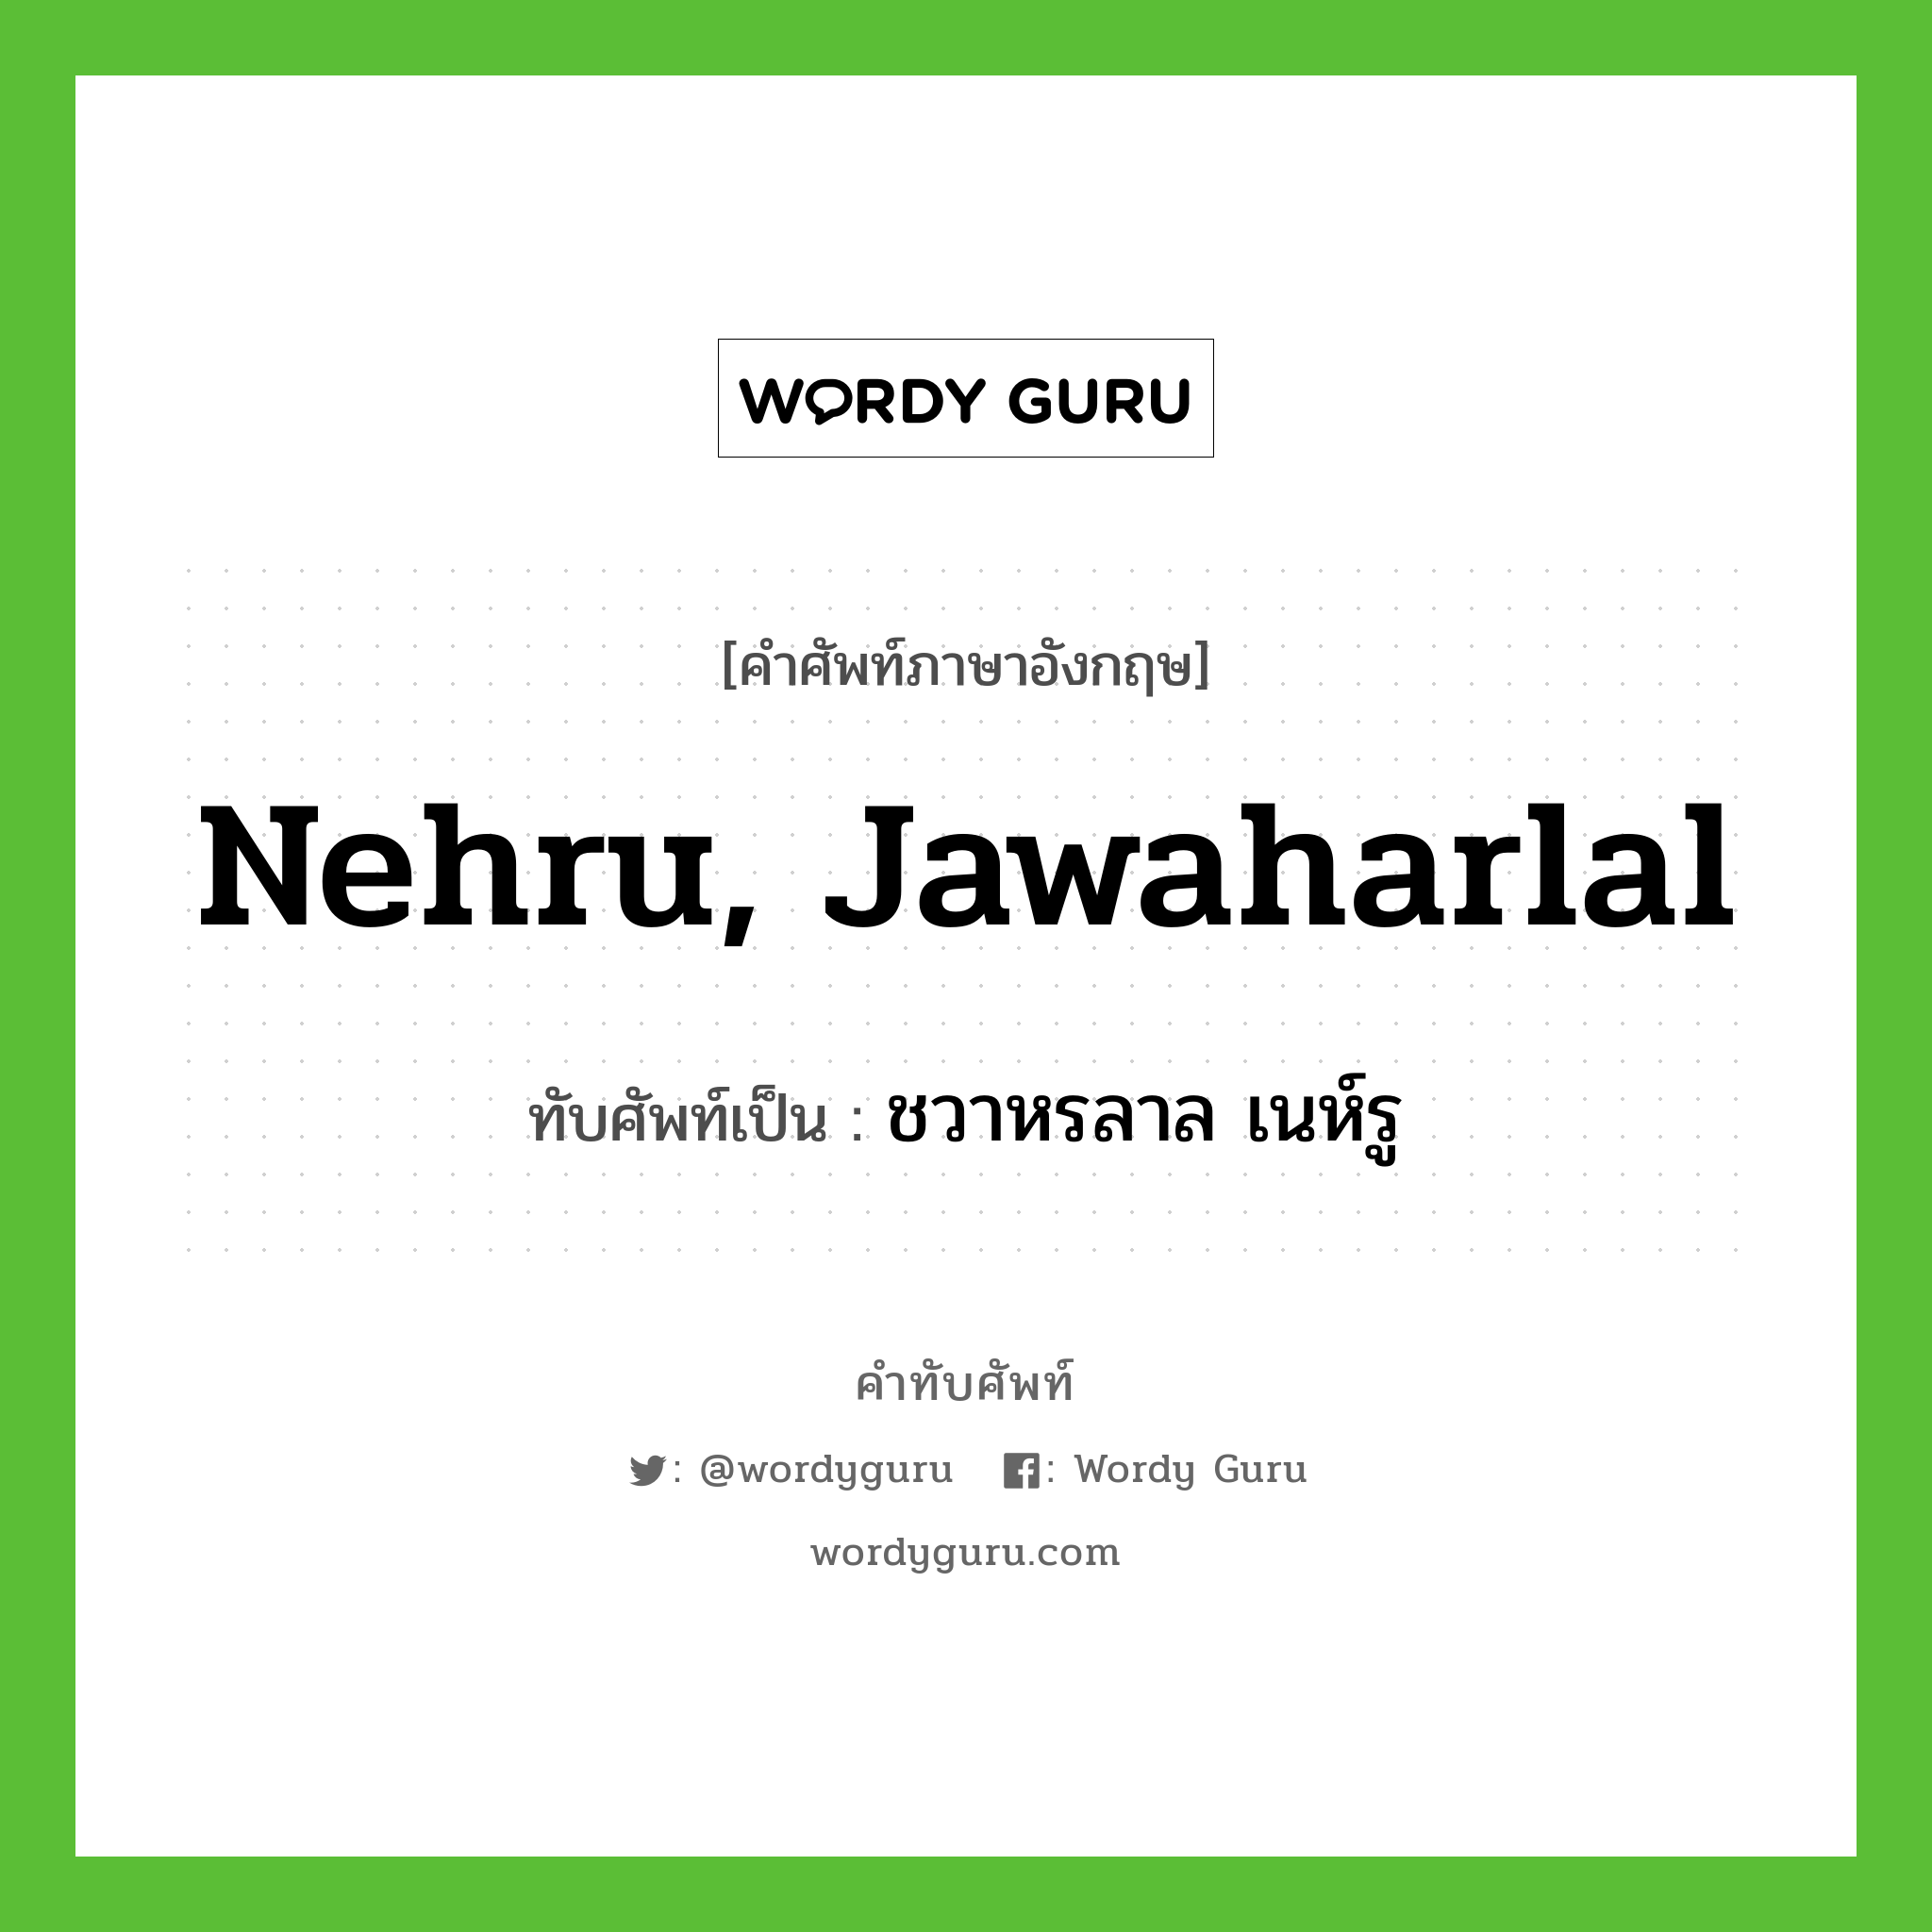 Nehru, Jawaharlal เขียนเป็นคำไทยว่าอะไร?, คำศัพท์ภาษาอังกฤษ Nehru, Jawaharlal ทับศัพท์เป็น ชวาหรลาล เนห์รู